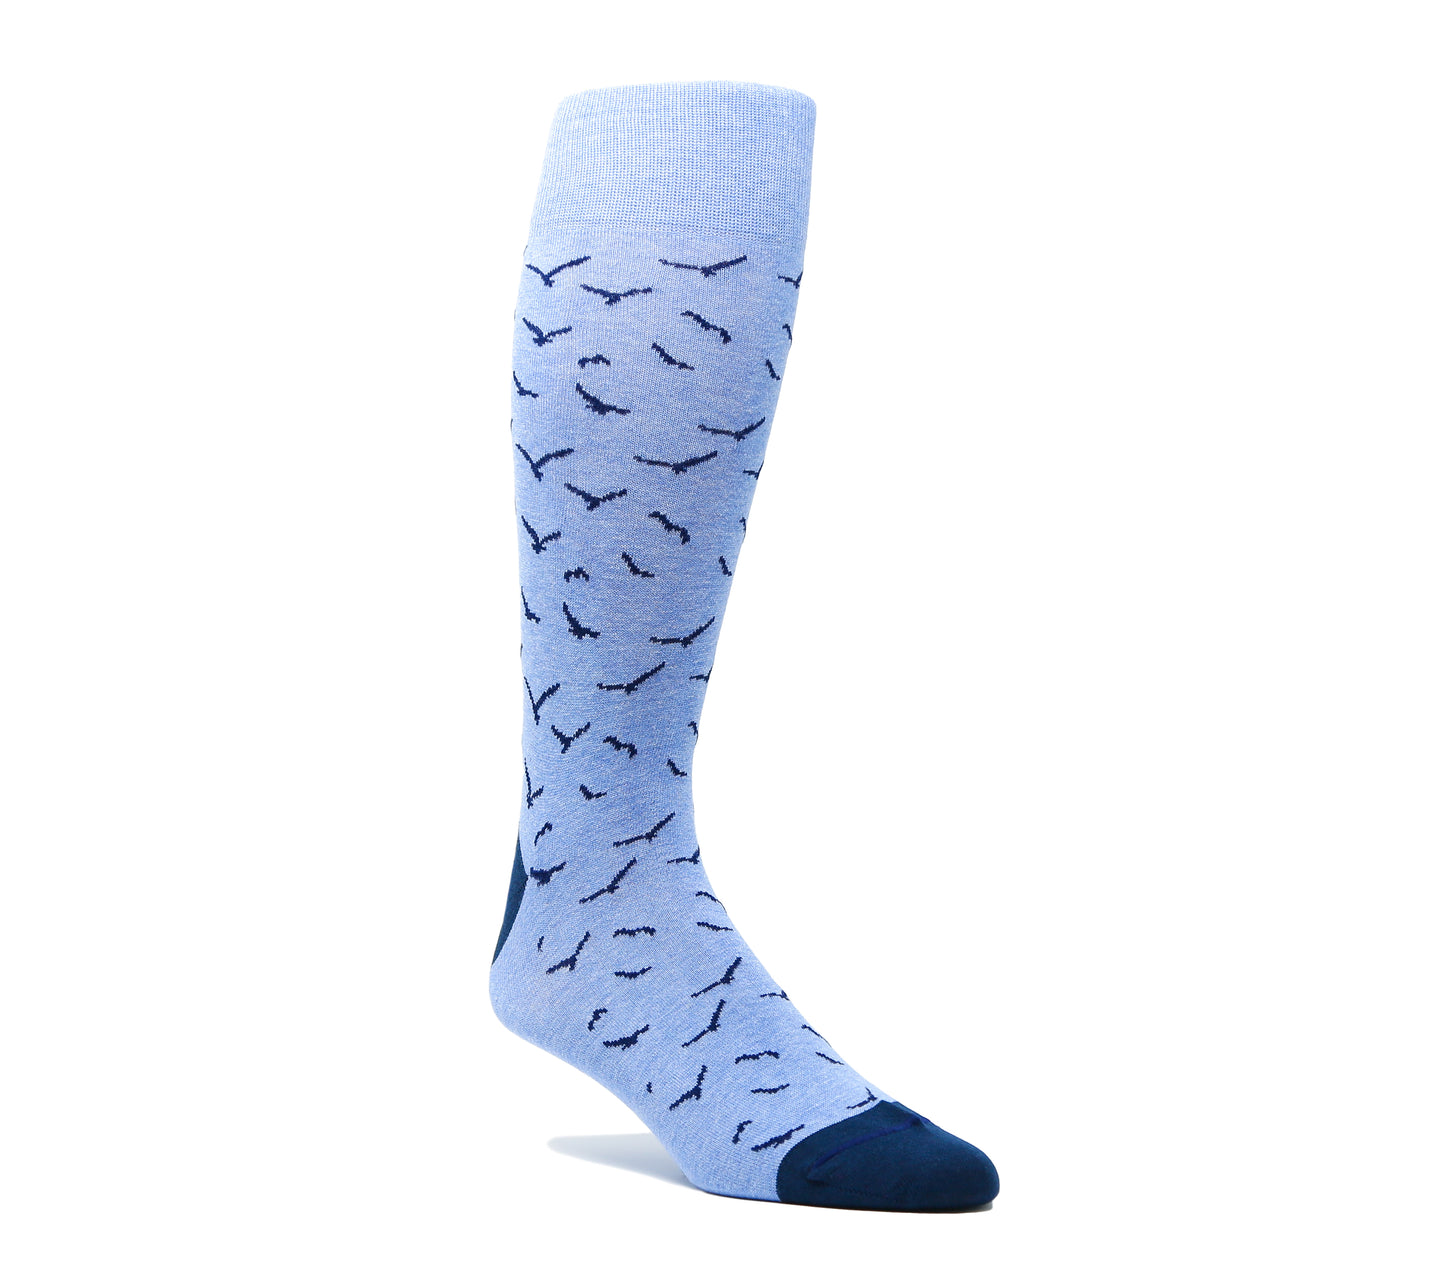 Seagulls Sock